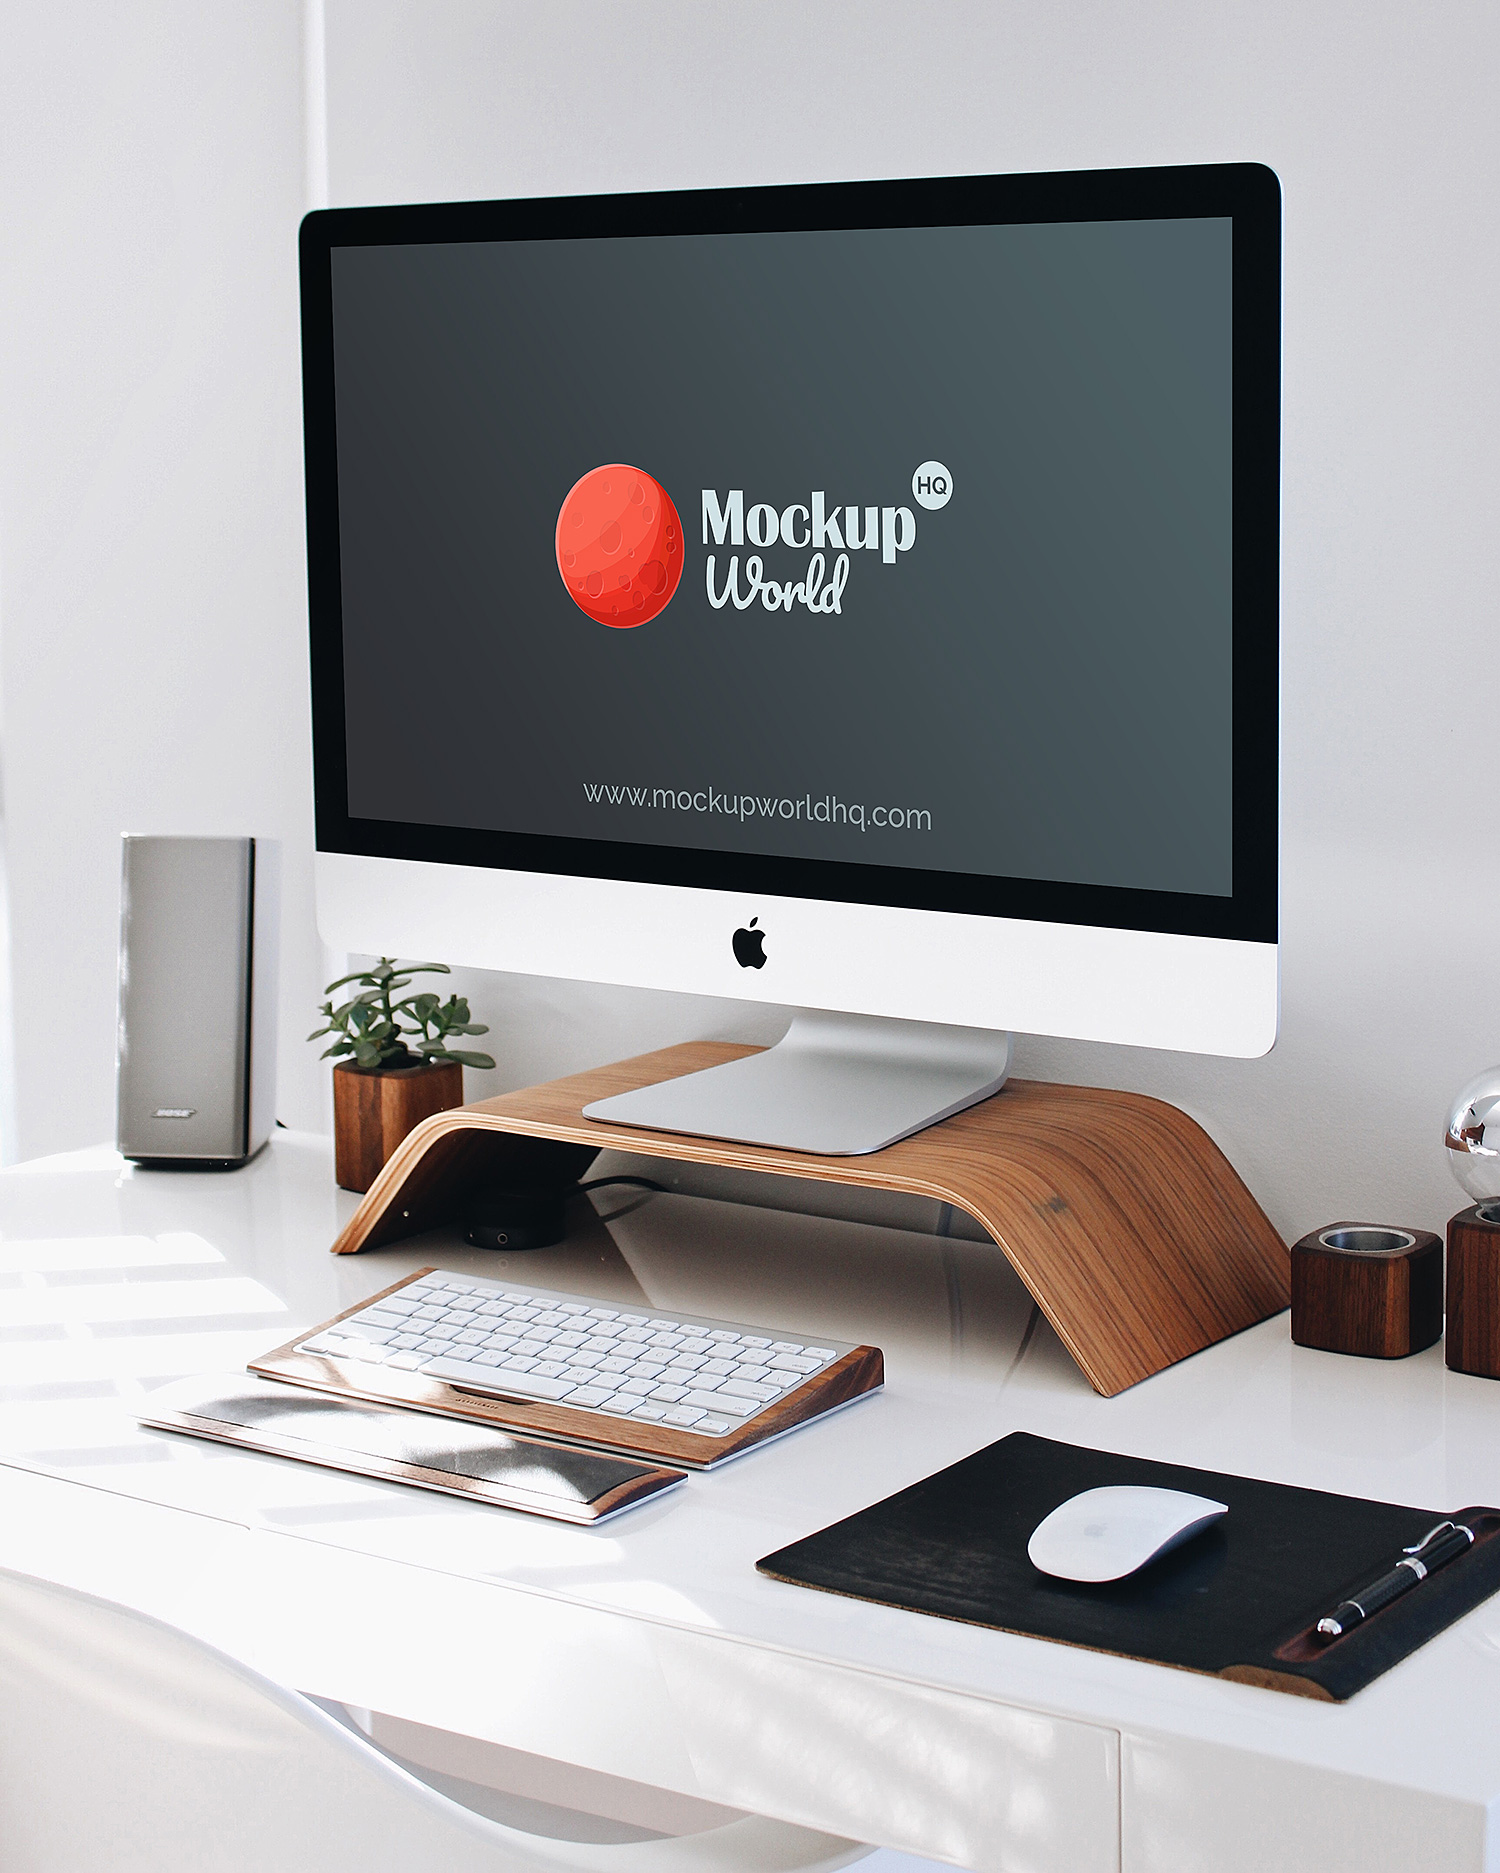 Download iMac Workspace Mockup PSD Free | Free Mockup